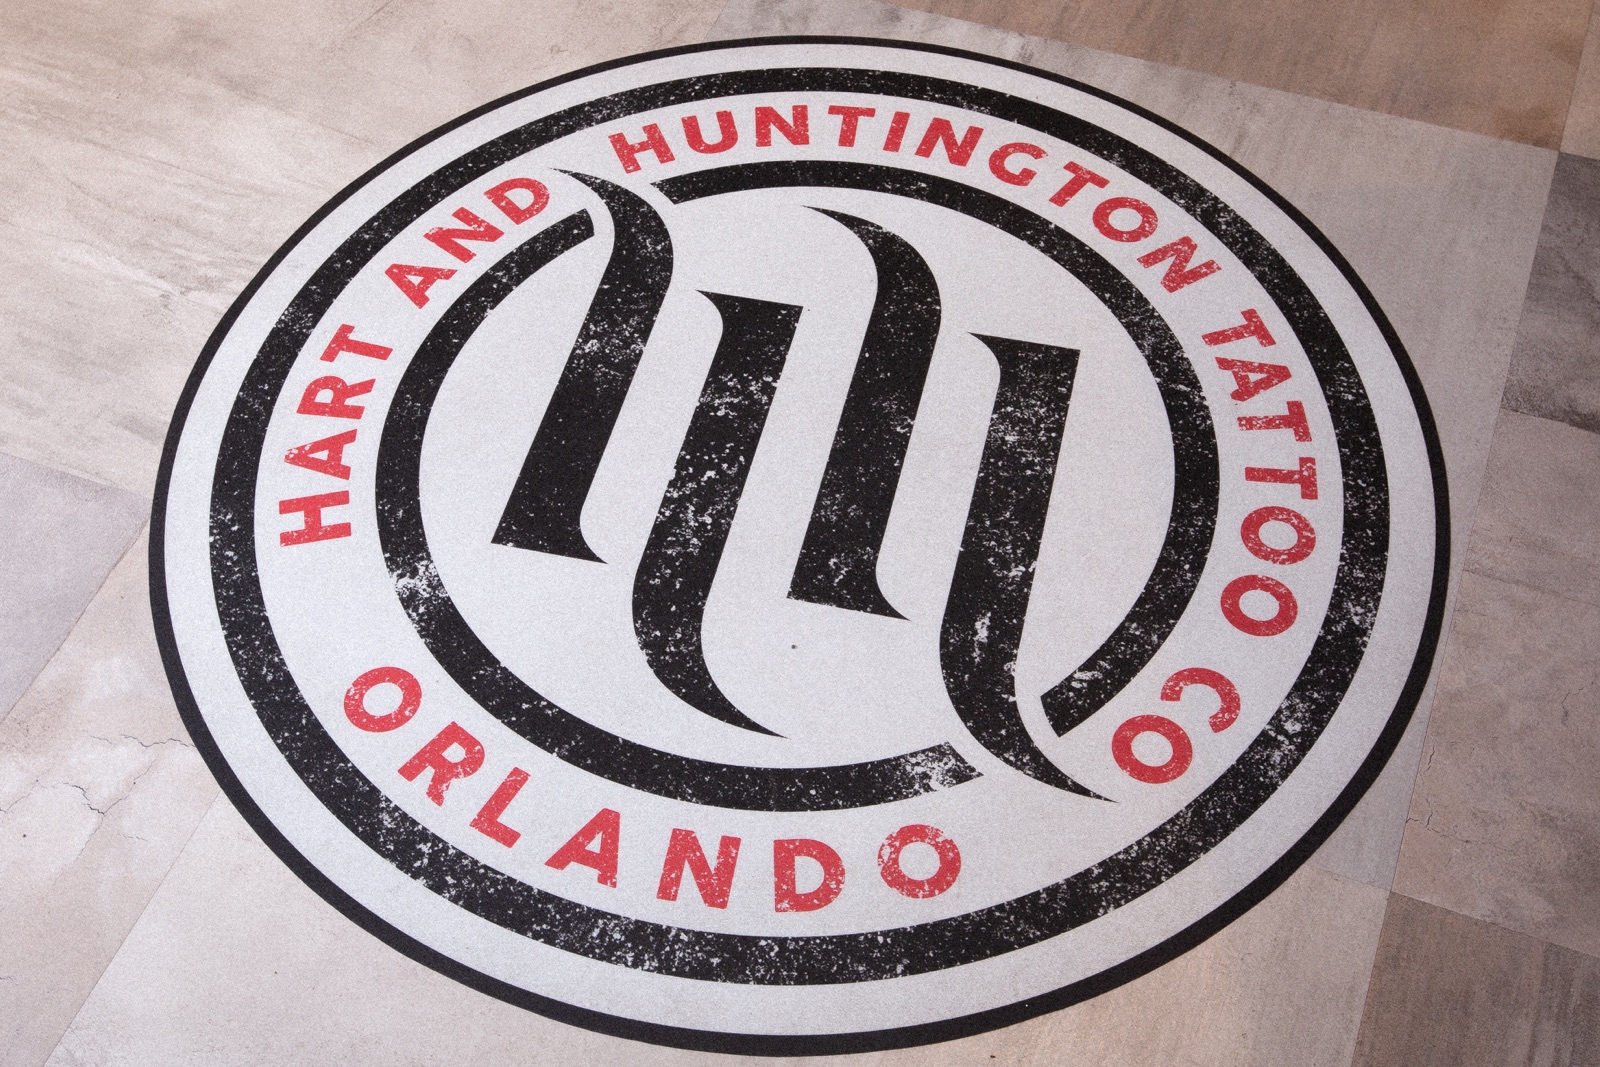 Orlando Tattoo Shop | Tattoos | Hart & Huntington Tattoo Co. Orlando